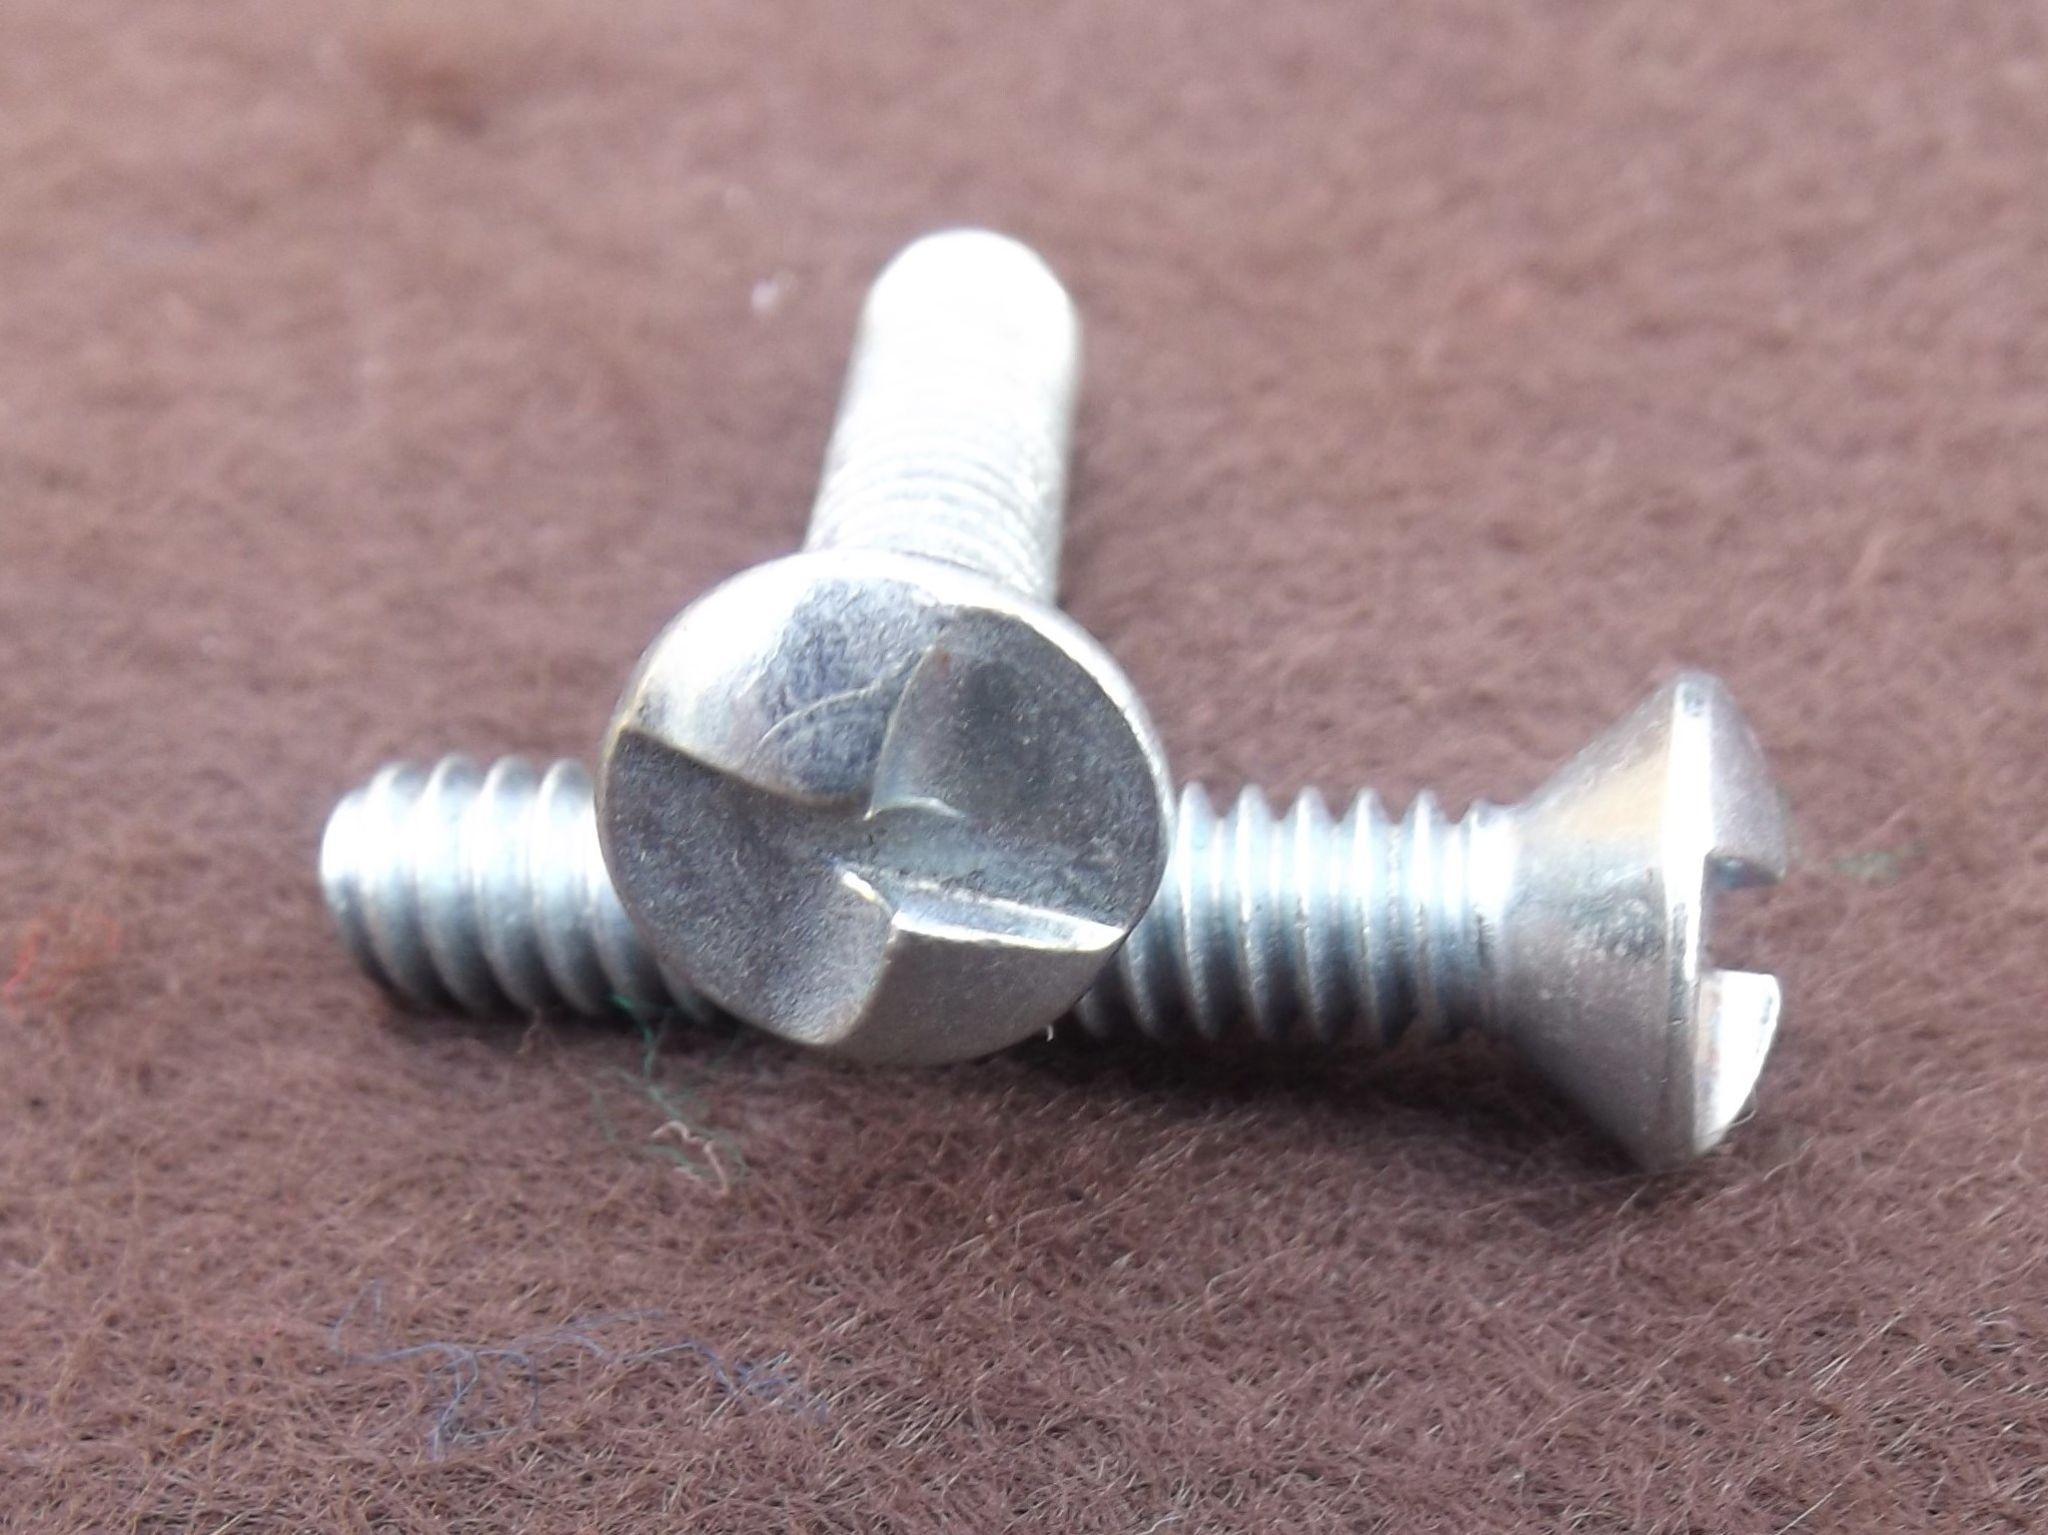 Pentalobe screw - Wikiwand